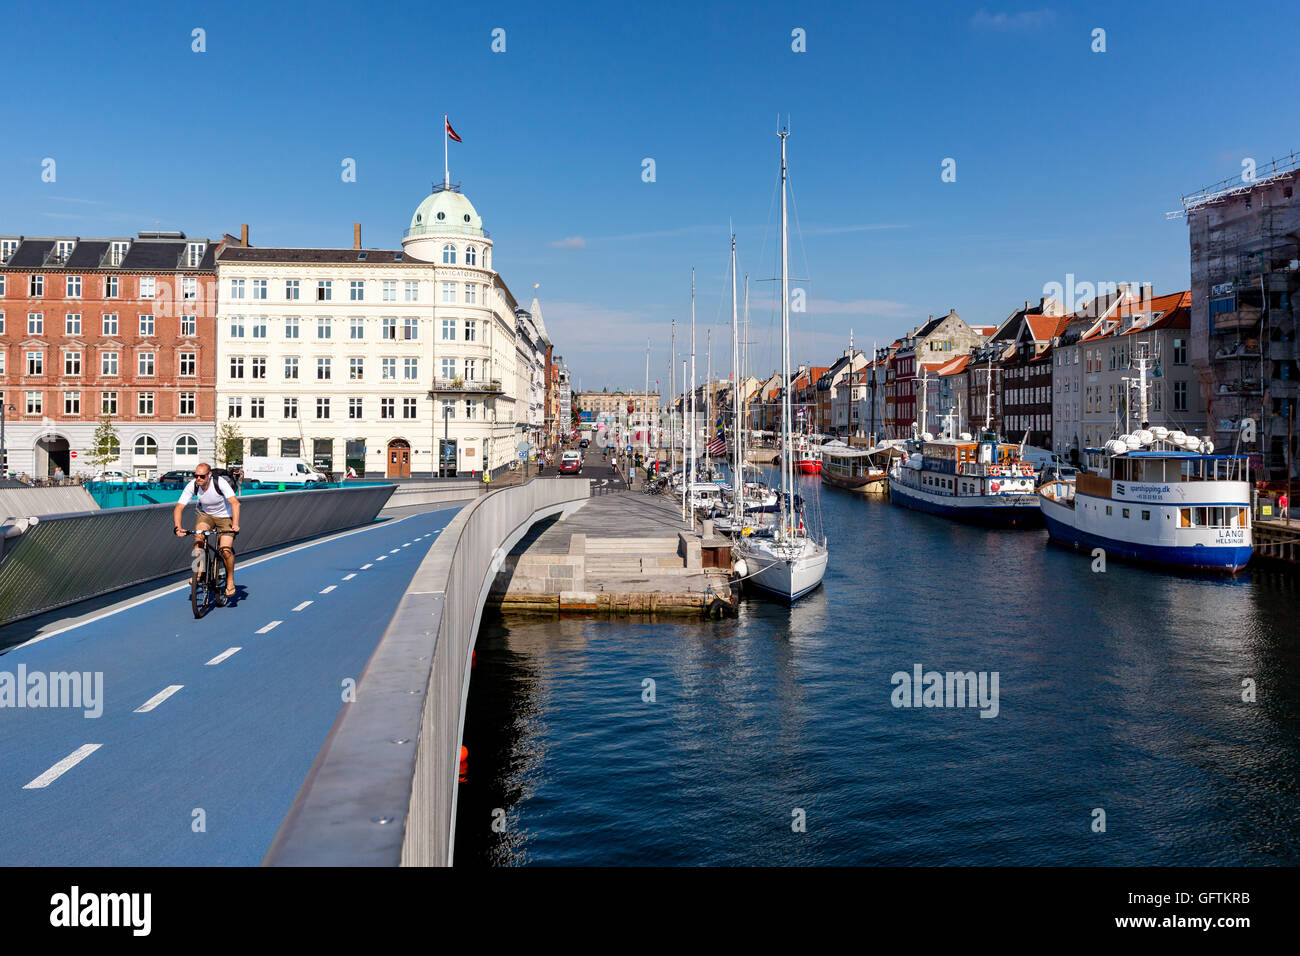 Inderhavnsbroen (Inner Harbour) a pedestrian and cyclist bridge connecting Nyhavn and Christianshavn, Copenhagen, Denmark Stock Photo